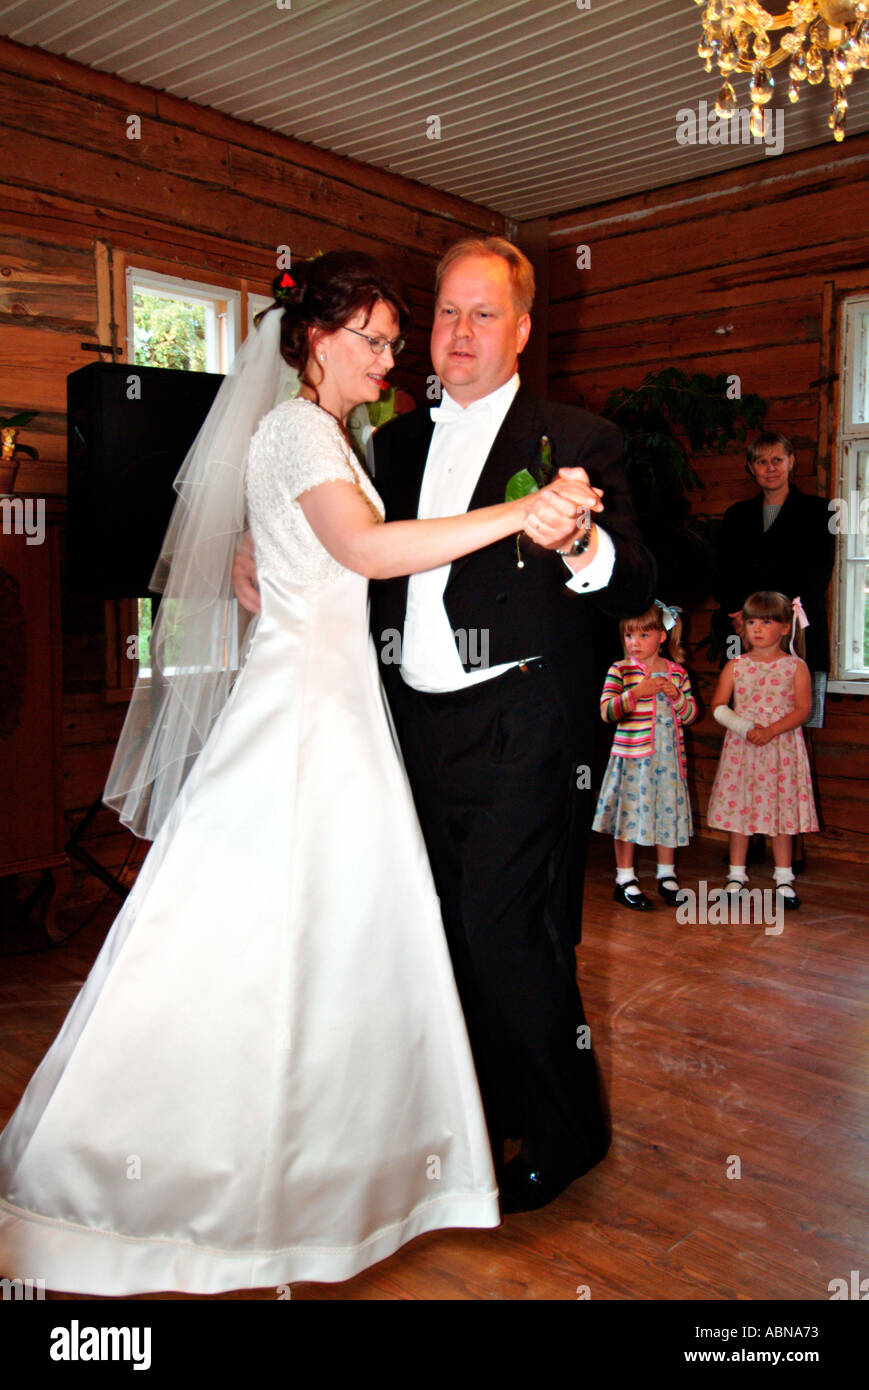 bridal pair dancing wedding walz MR Stock Photo